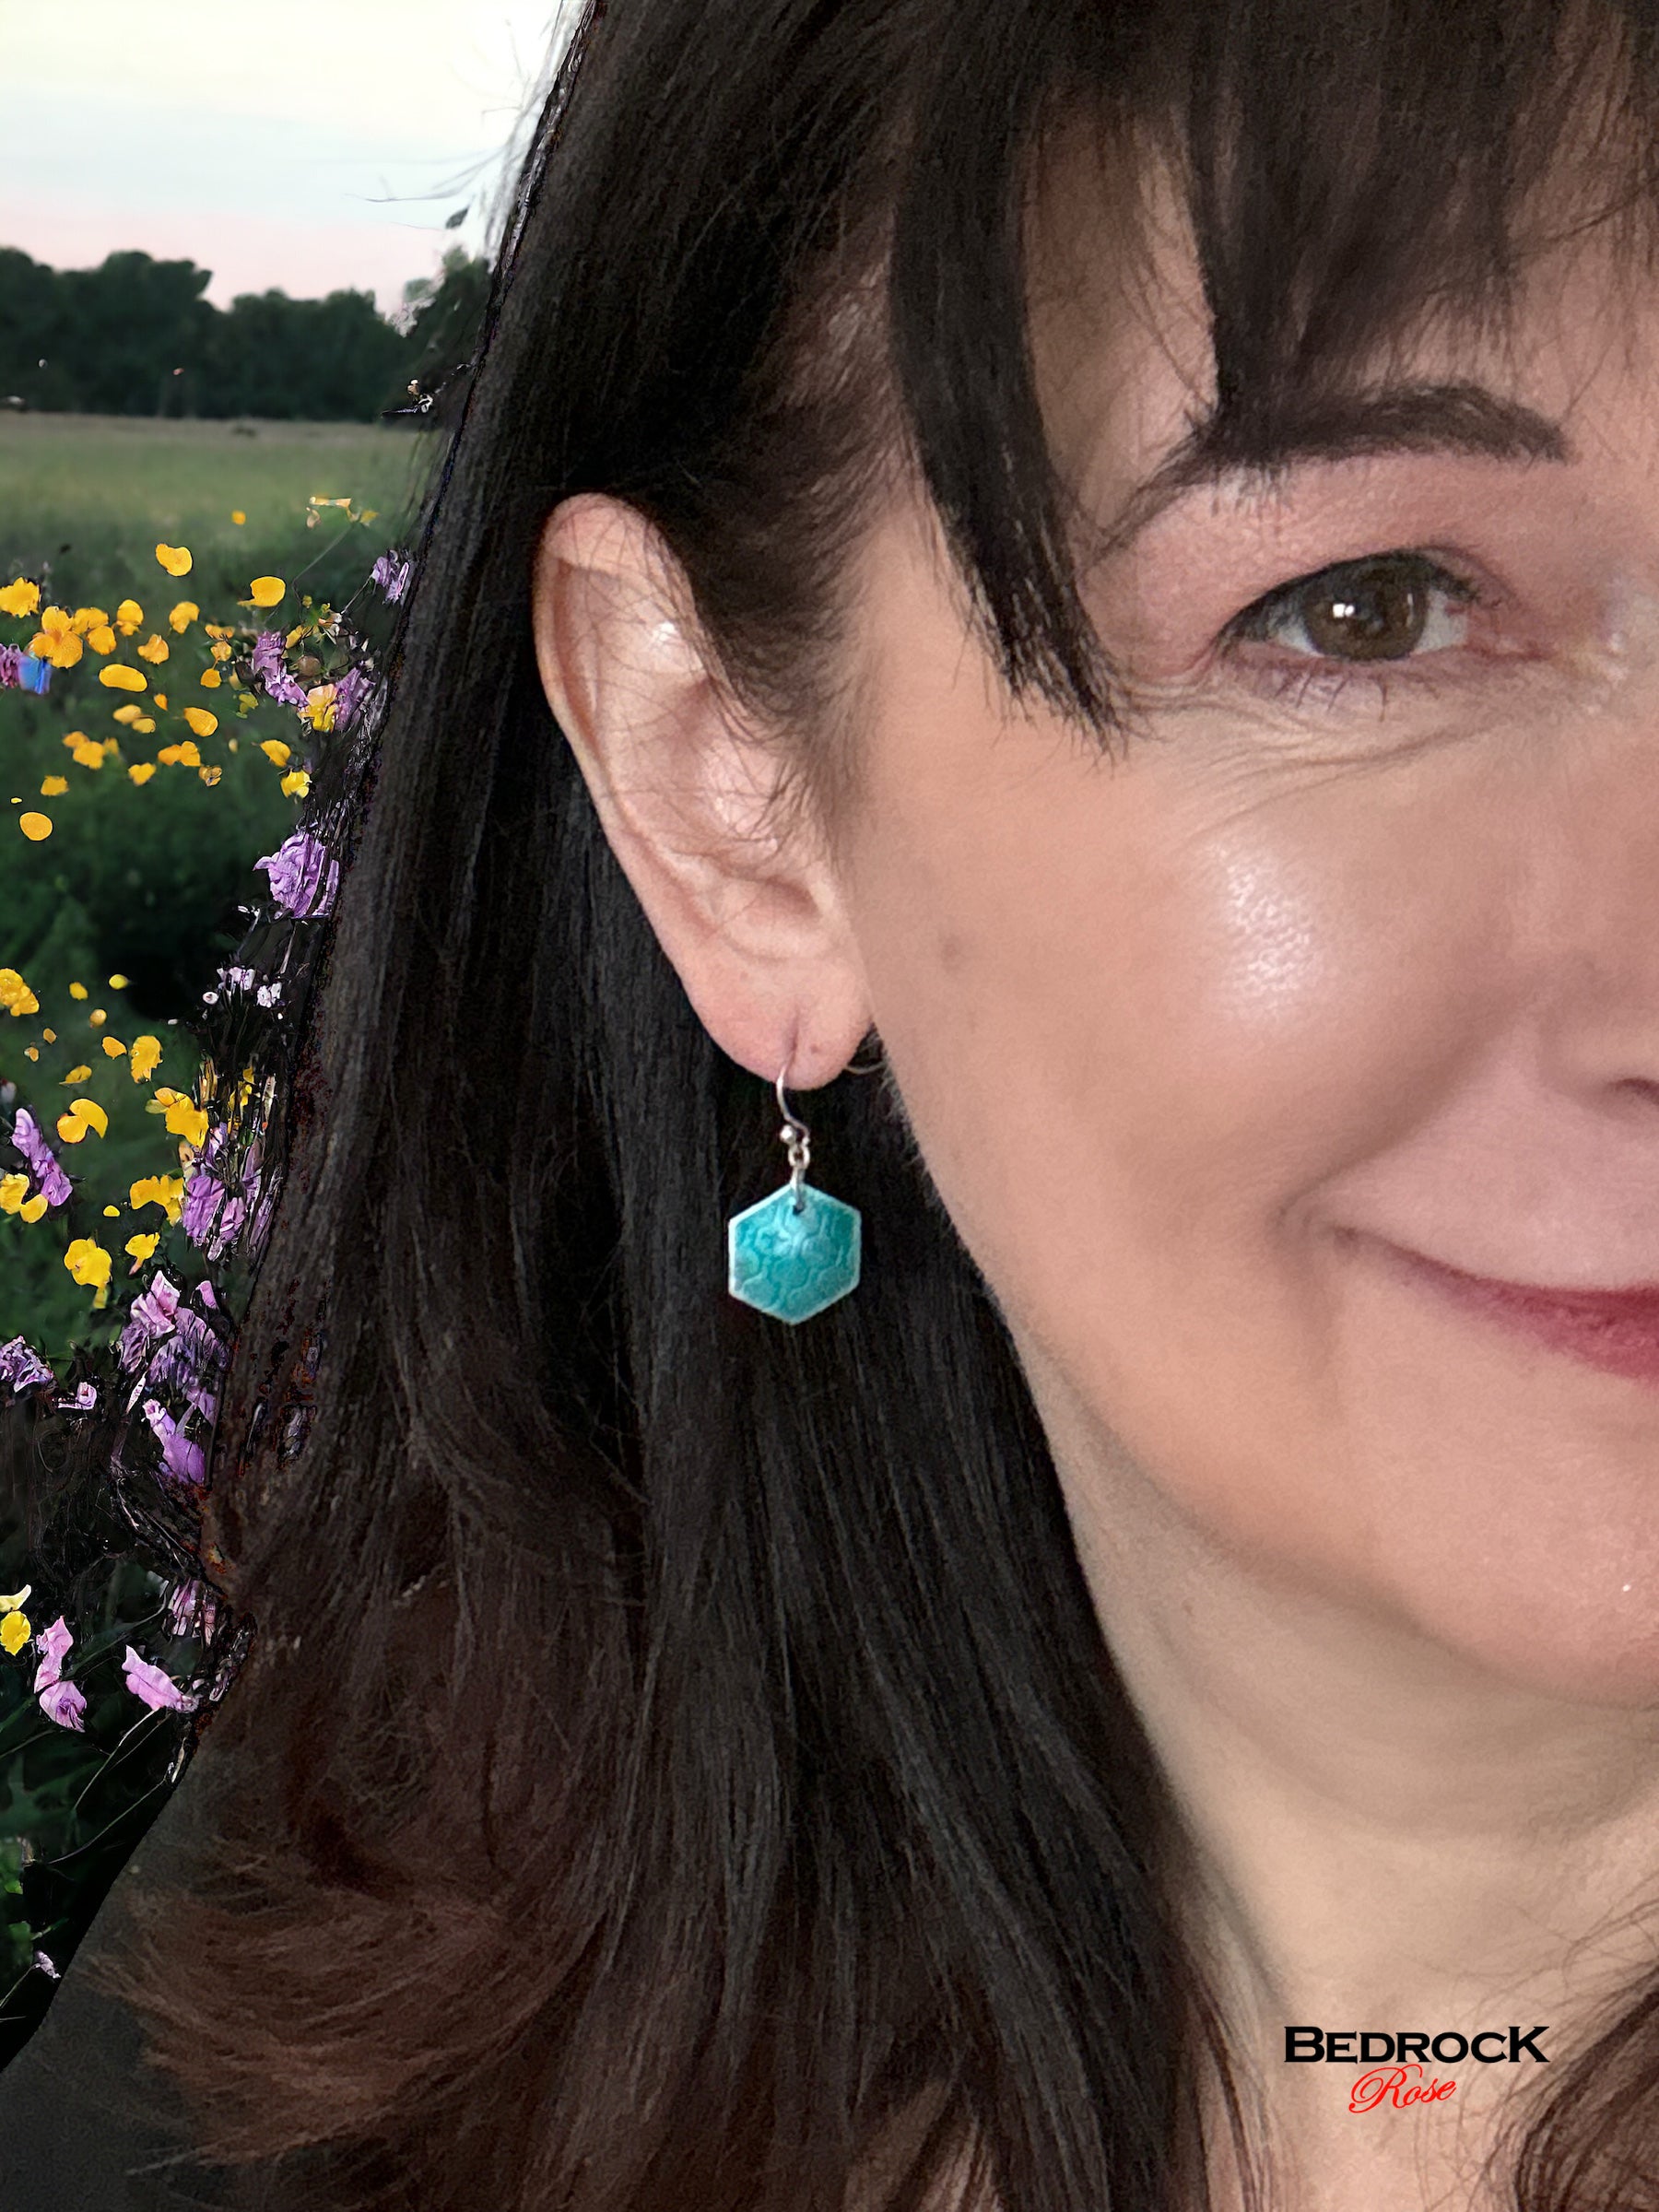 Teal green geometric earrings with honeycomb texture, fine silver enameled dangle earrings, handmade jewelry, glass earrings, gift for her, hexagon shaped earrings